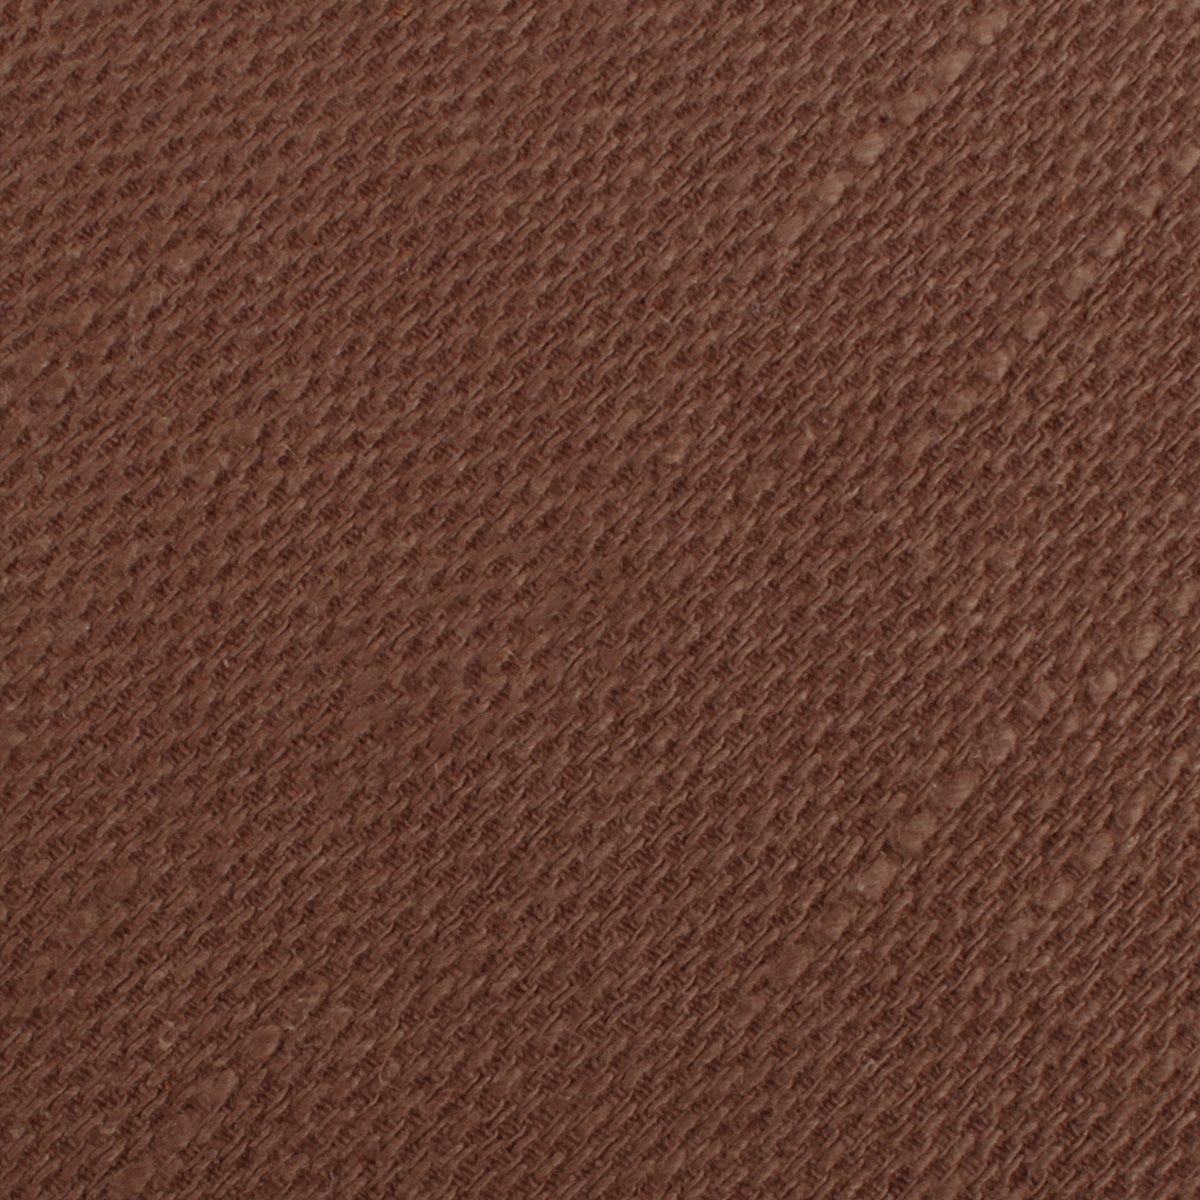 Cinnamon Brown Coarse Linen Fabric Swatch